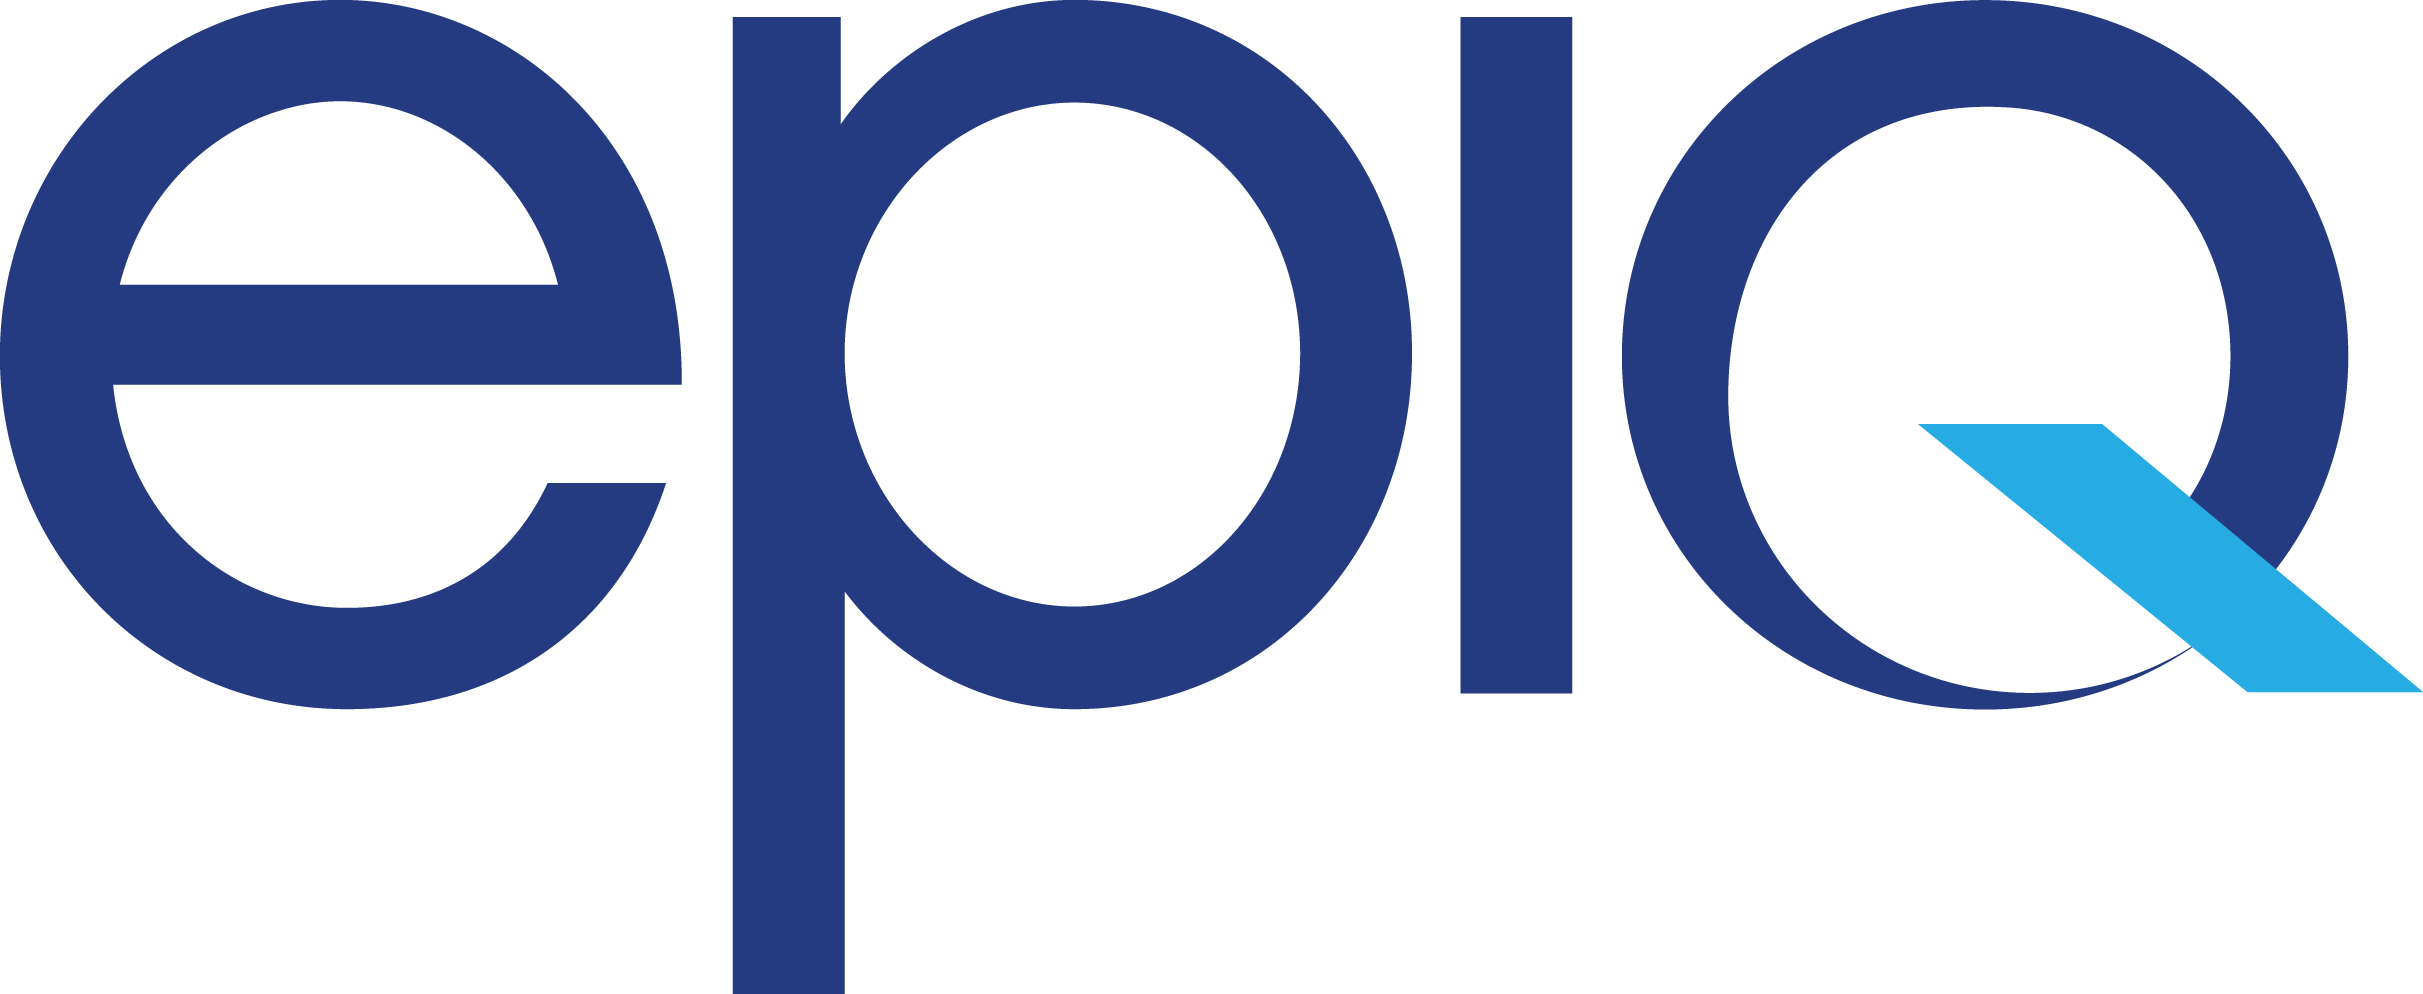 1000 Epiq Systems, Inc. logo